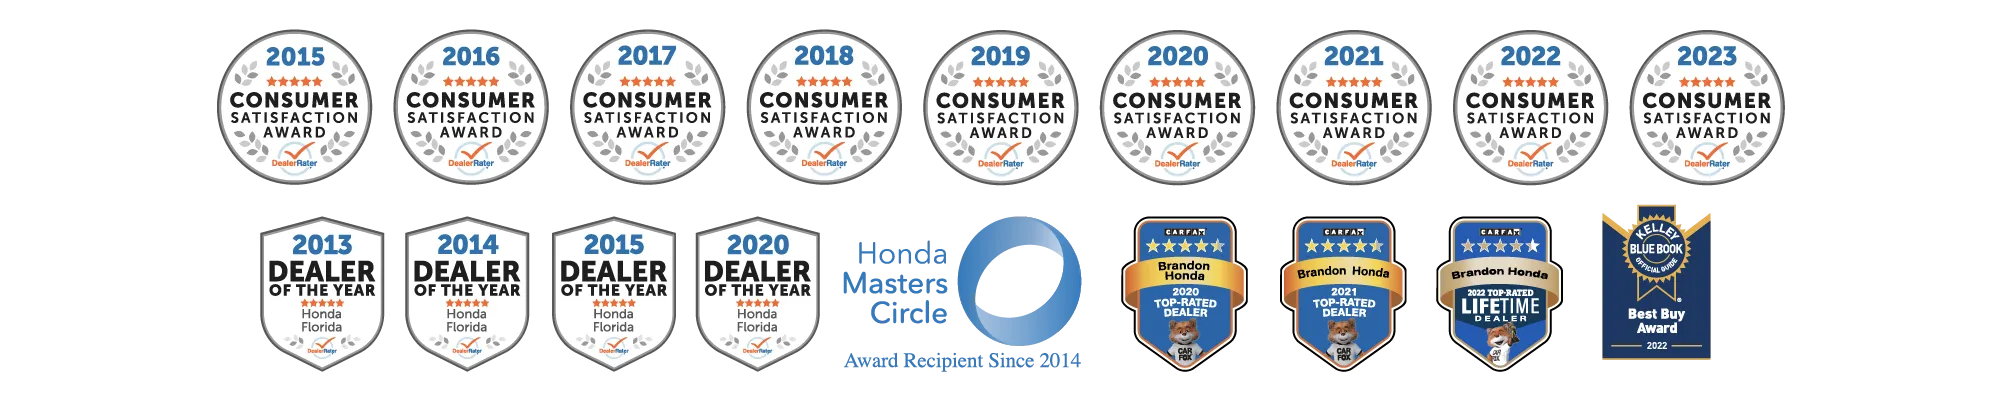 Awards and Certificates for Brandon Honda